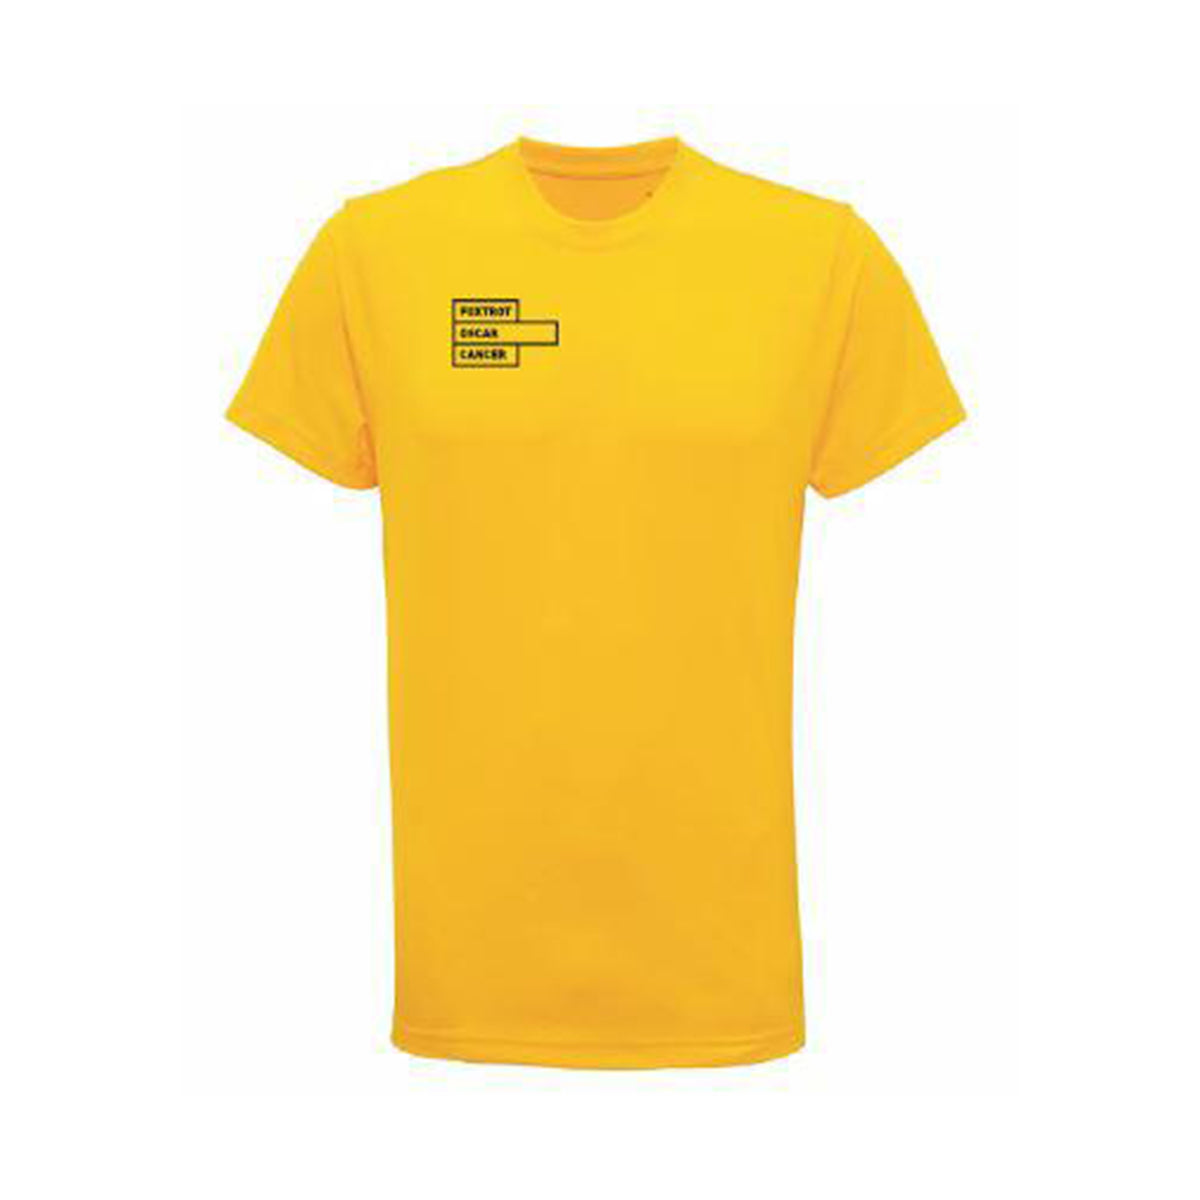 Foxtrot Oscar Gym T-Shirt: Sun Yellow